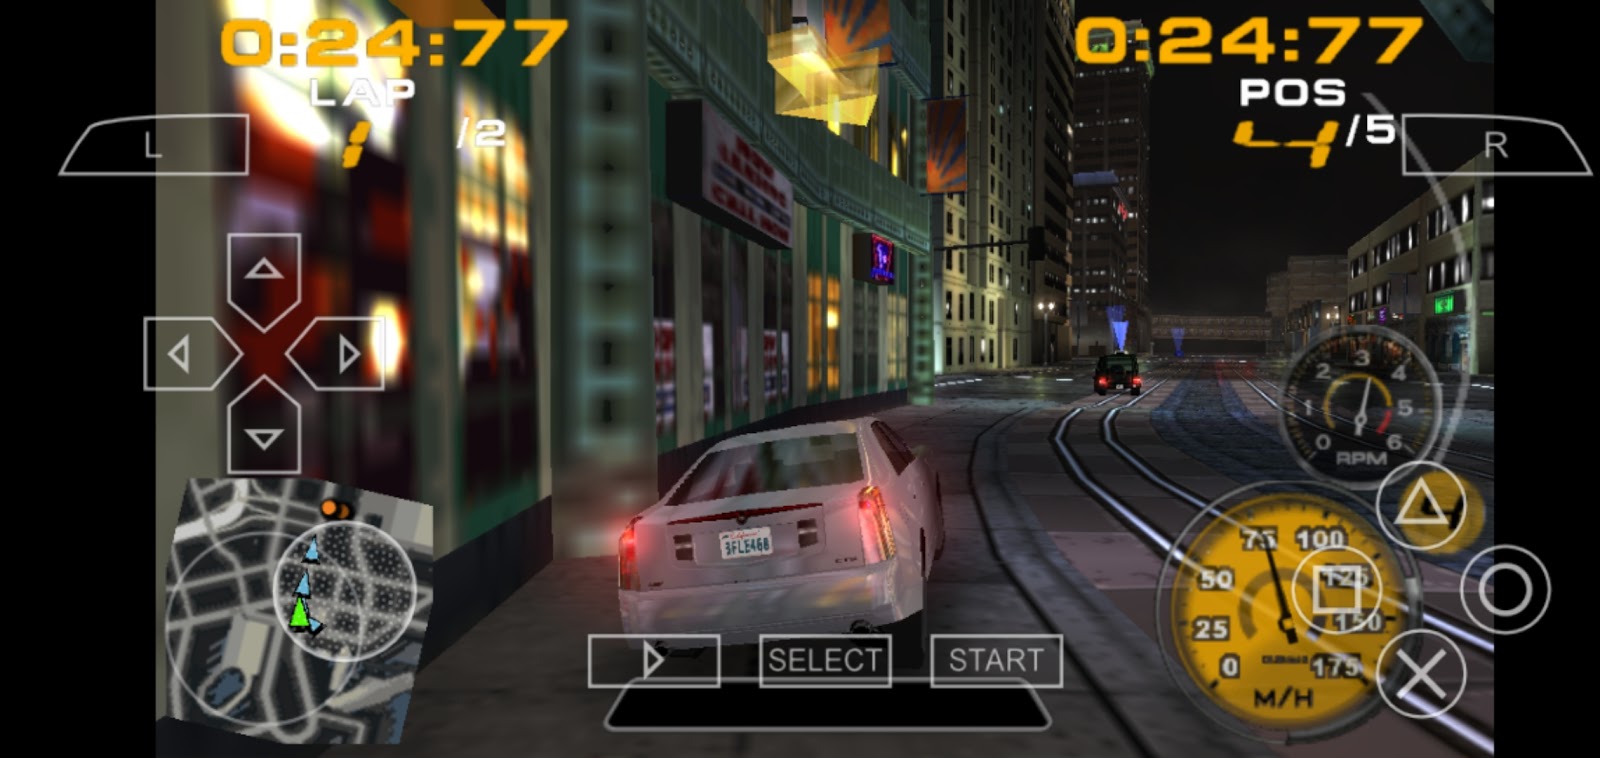 Midnight Club 3 - DUB Edition ROM - PSP Download - Emulator Games